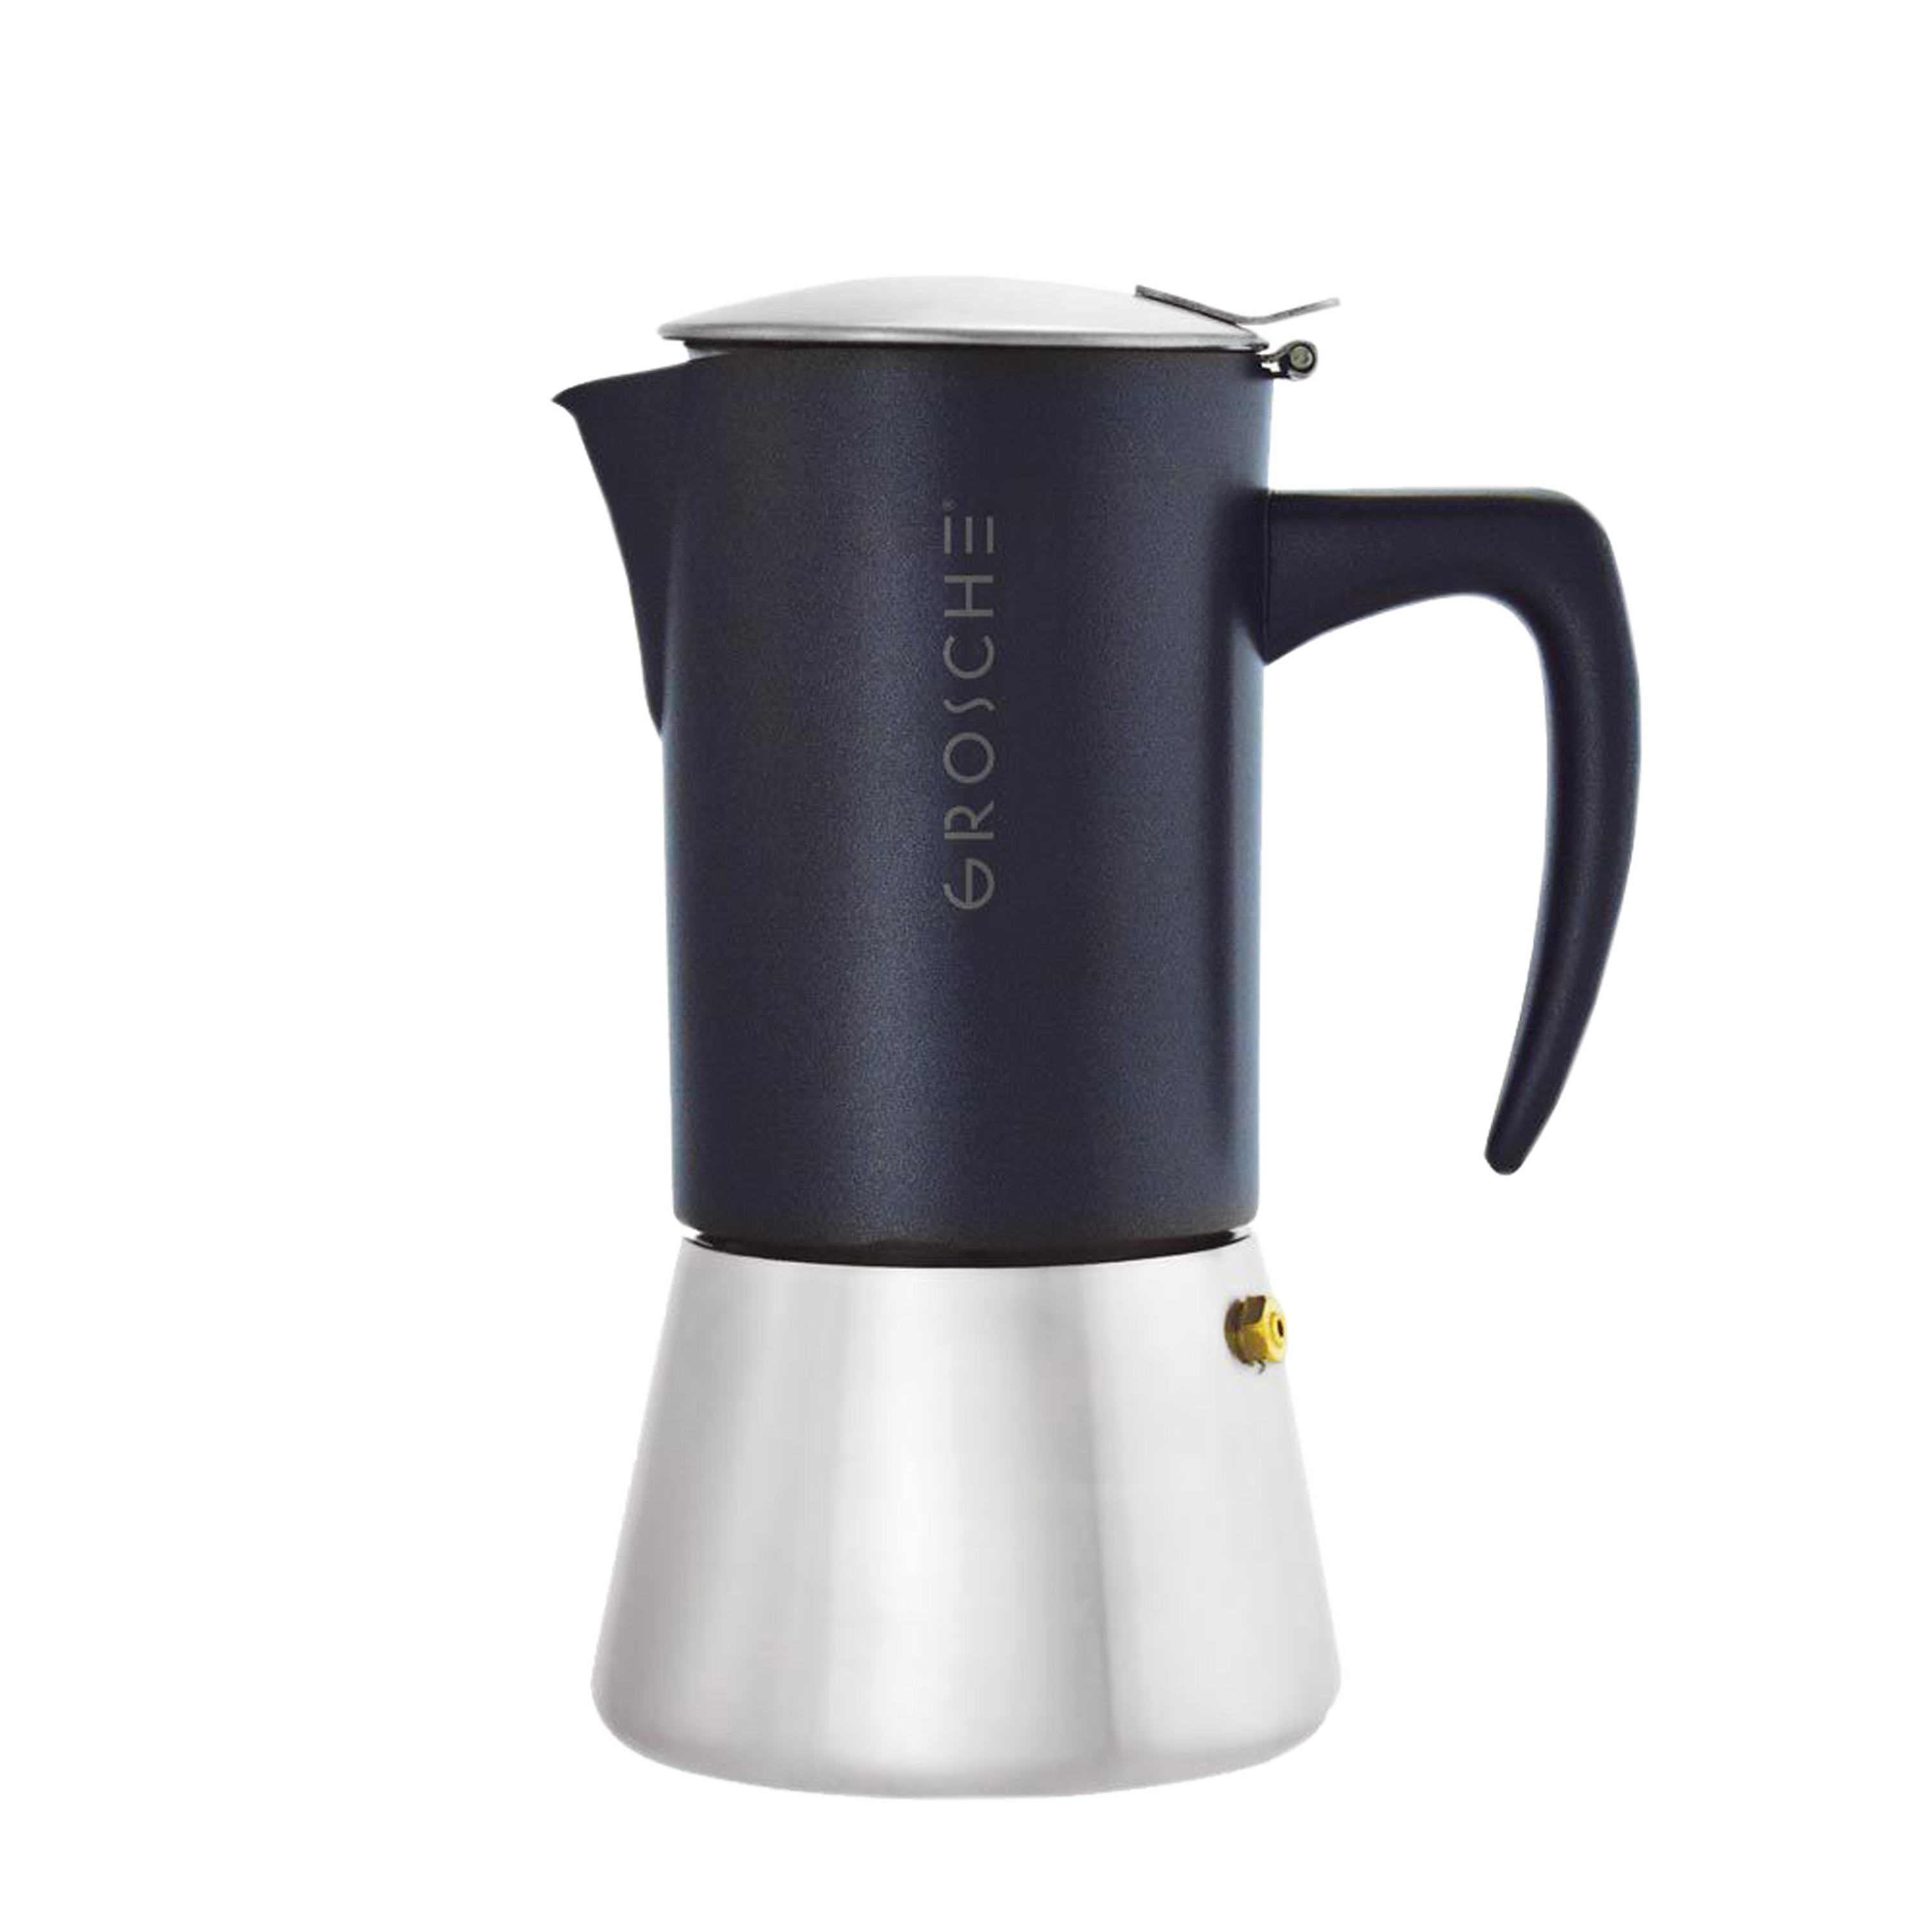 GROSCHE Milano Stovetop Espresso Maker Moka Pot 6 Cup - 9.3